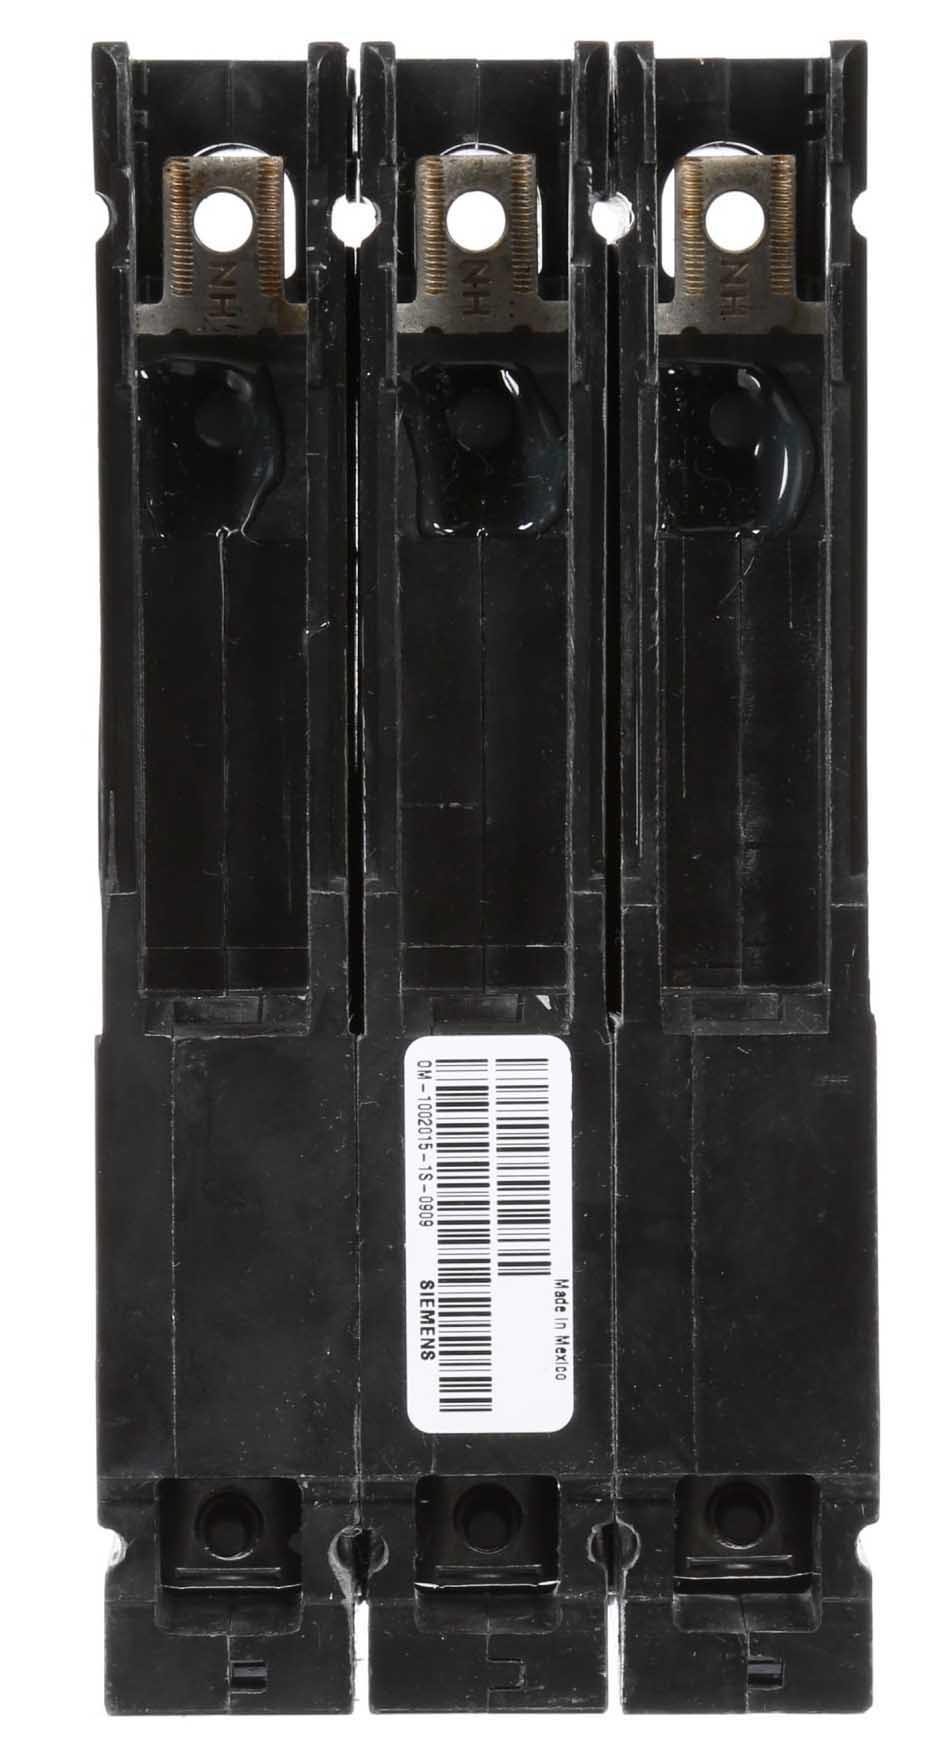 ED23B020 - Siemens - Molded Case Circuit Breaker